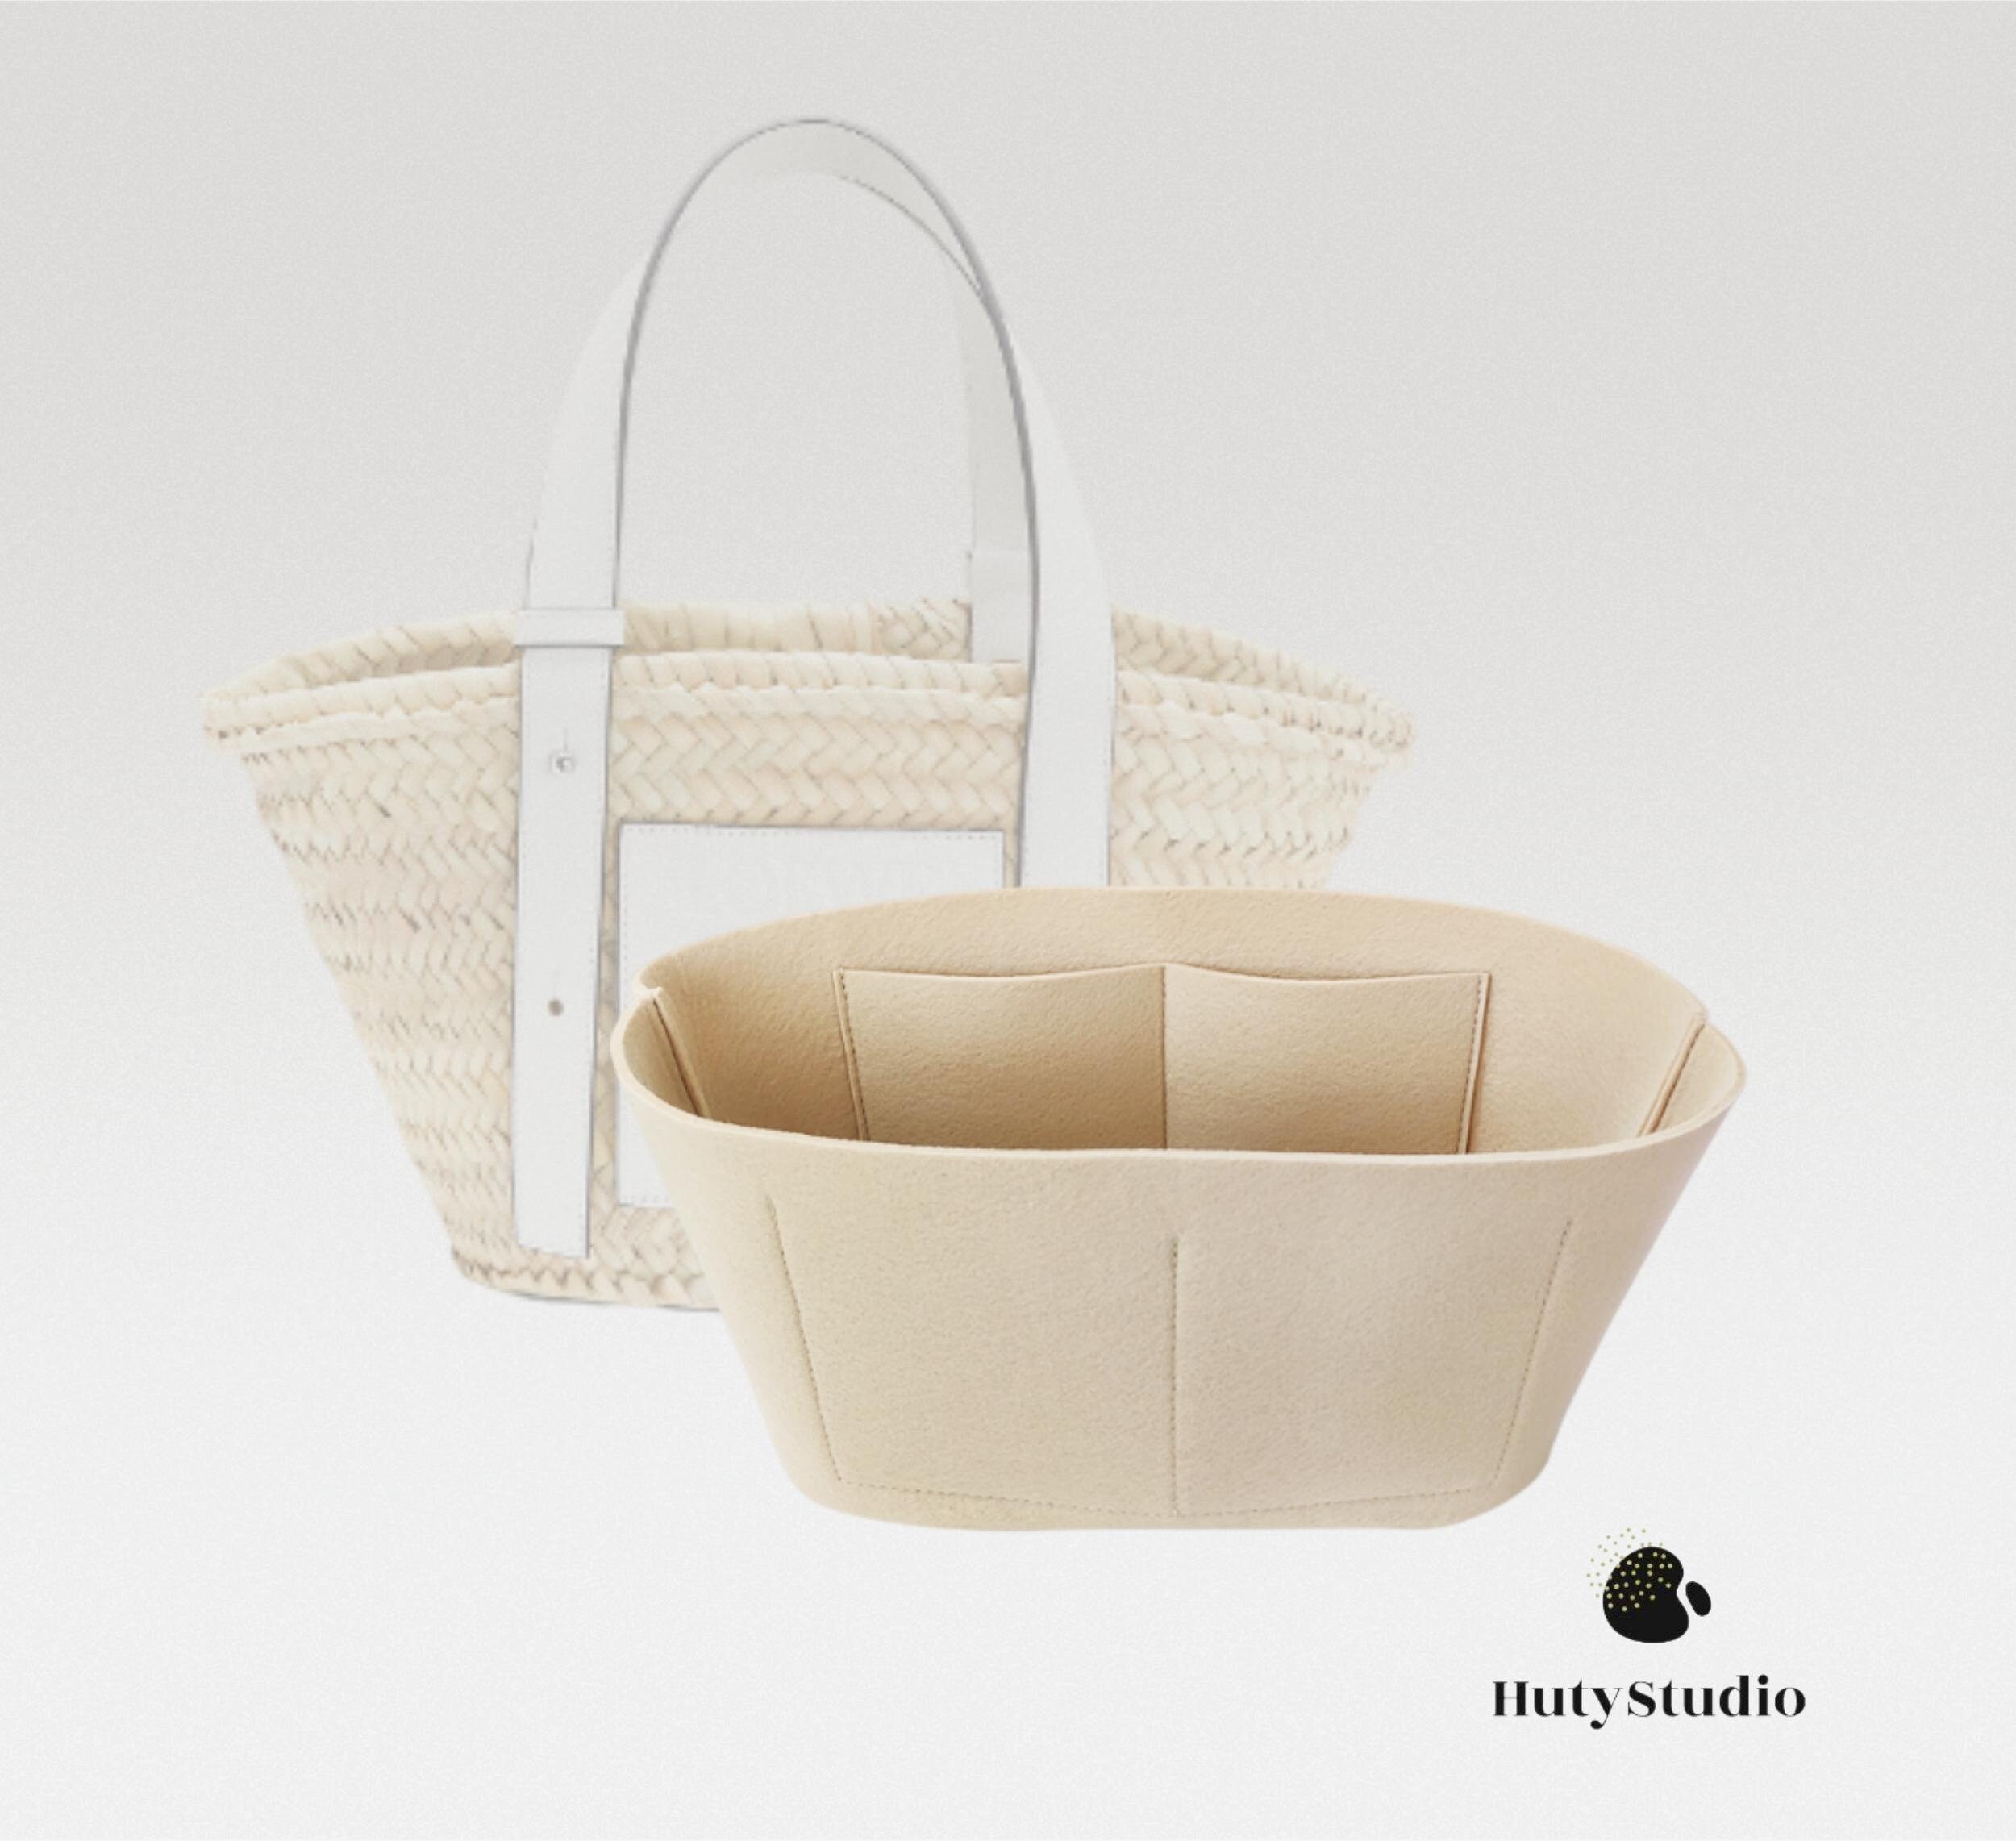 LOEWE Basket Bag in Palm Leaf and Calfskin Natural/White in